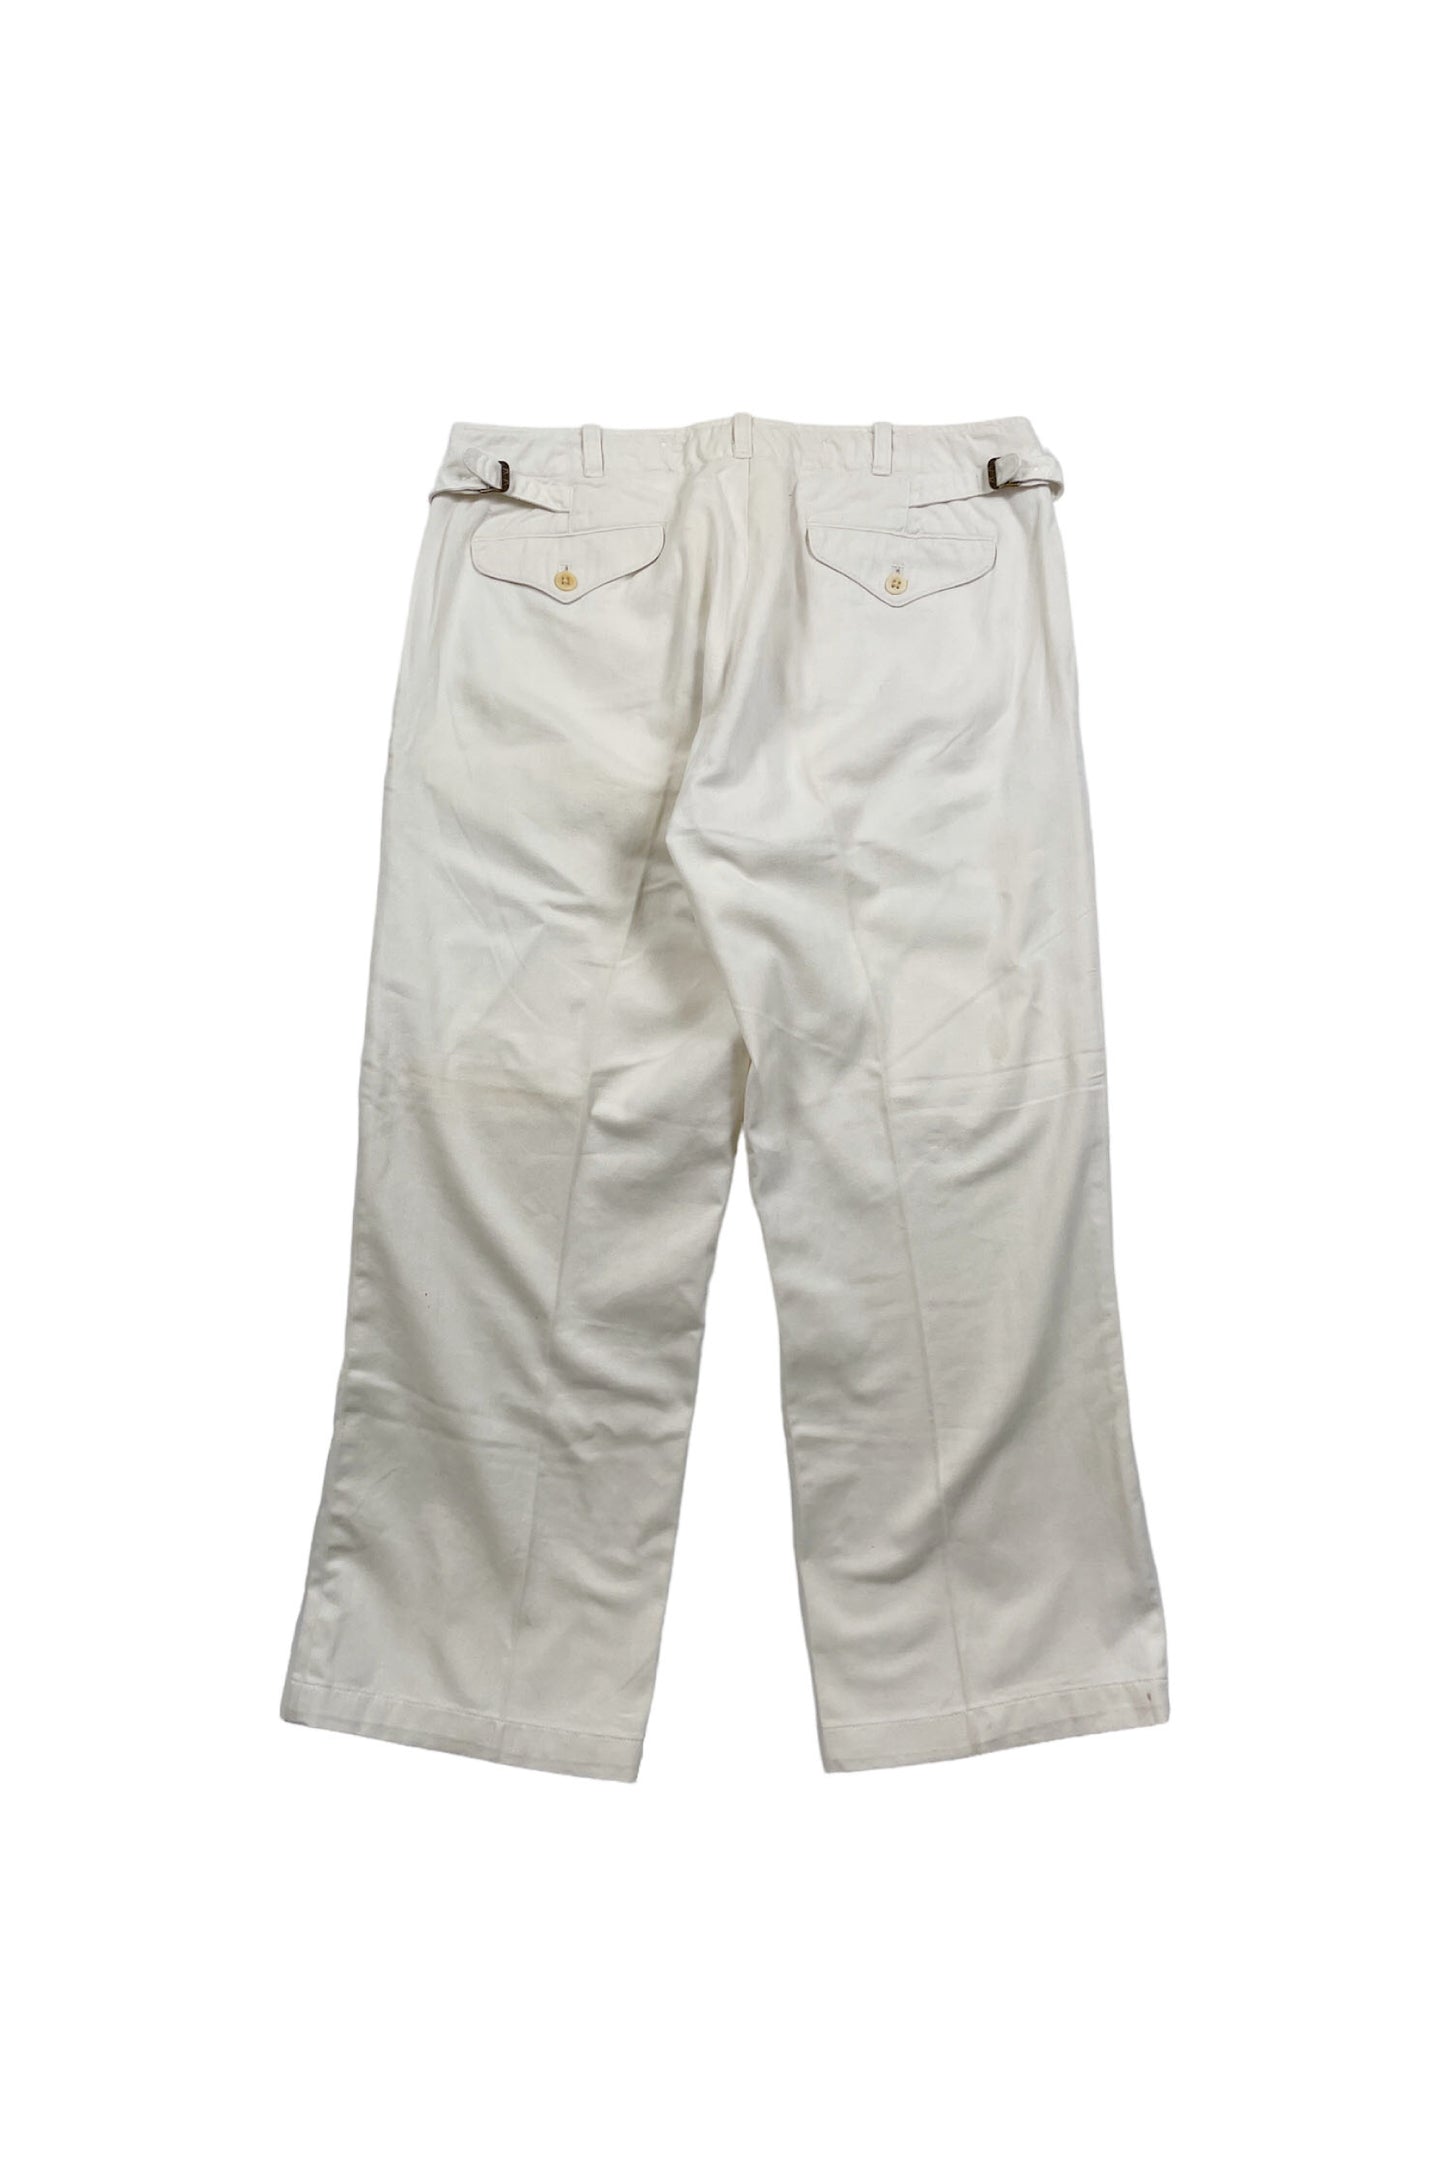 90's Polo by Ralph Lauren white cotton pants